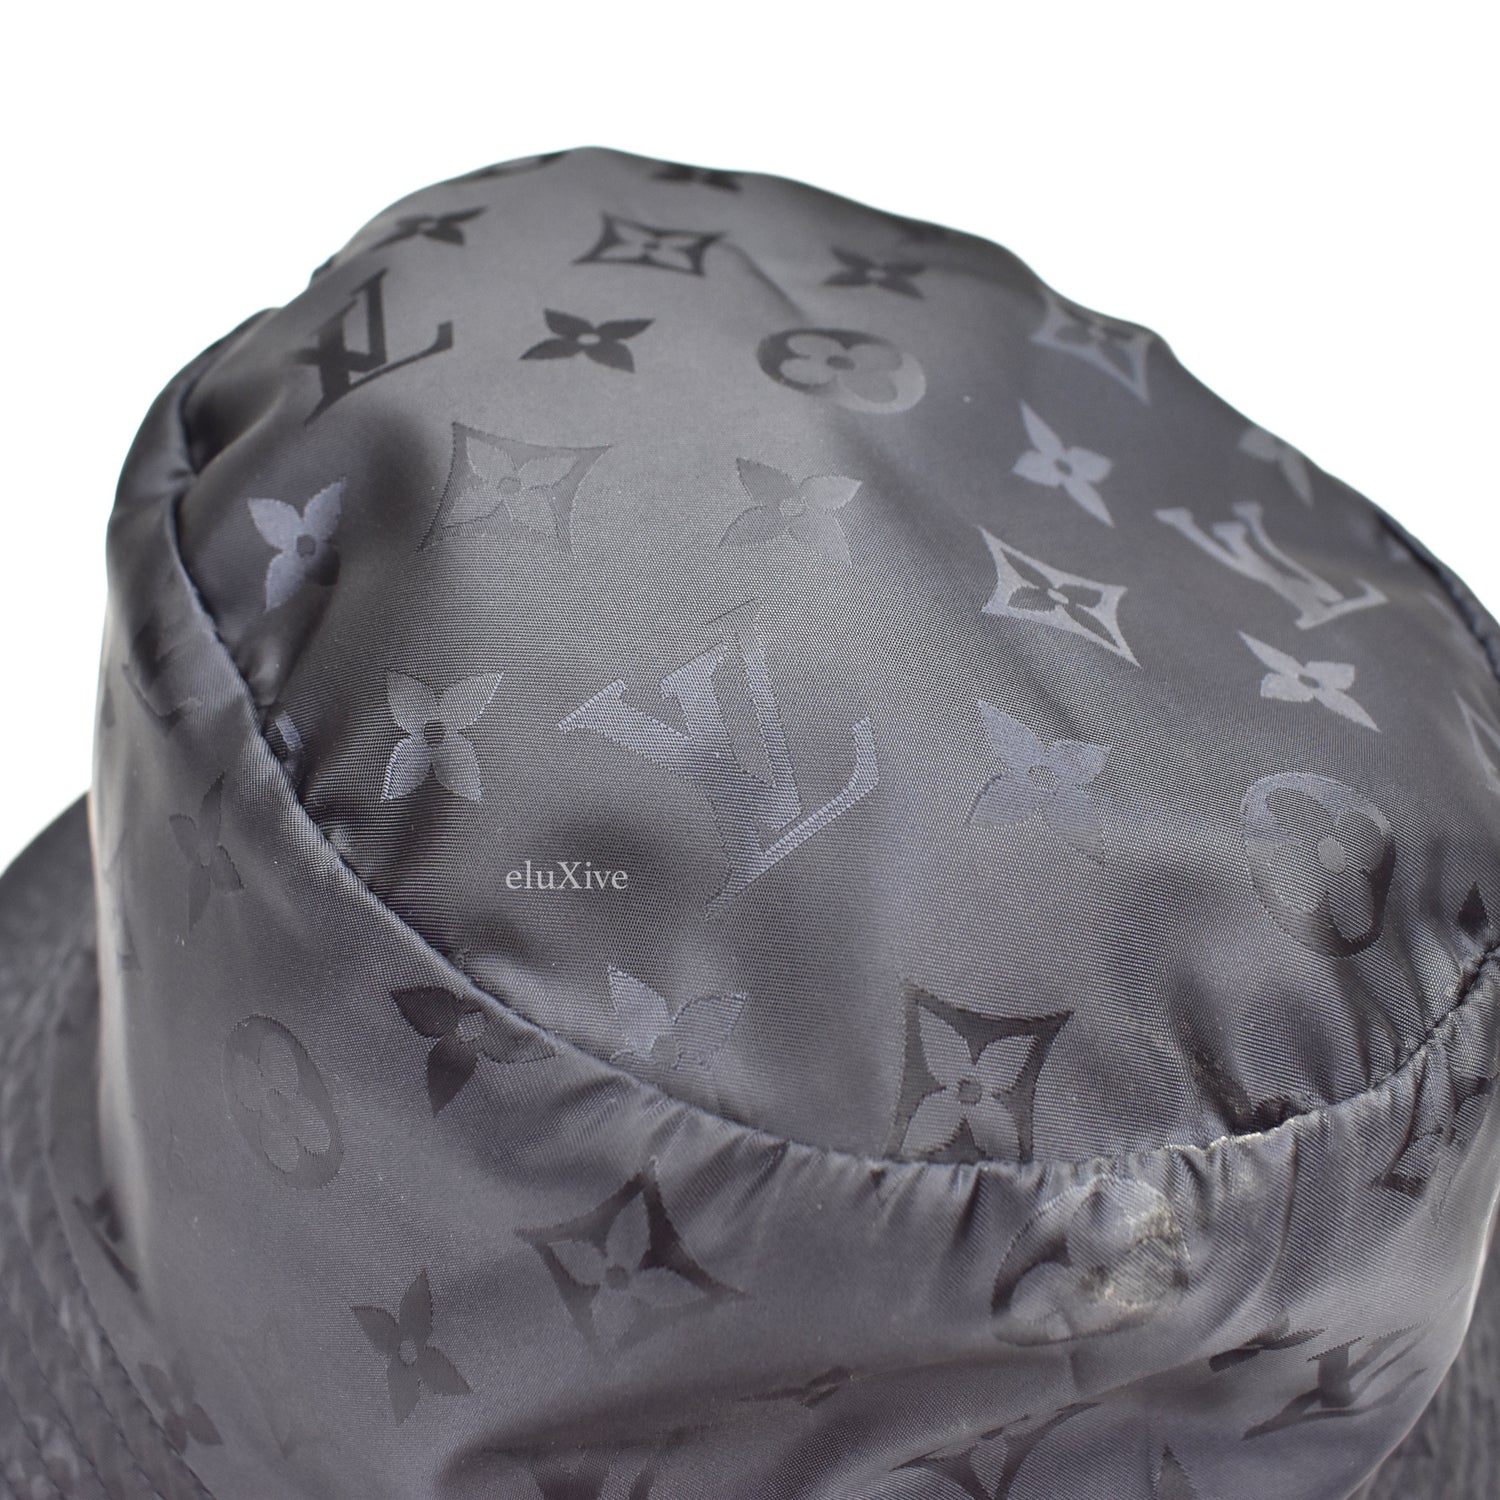 Louis Vuitton Tigergram Reversible Bucket Hat Brown Cotton. Size M